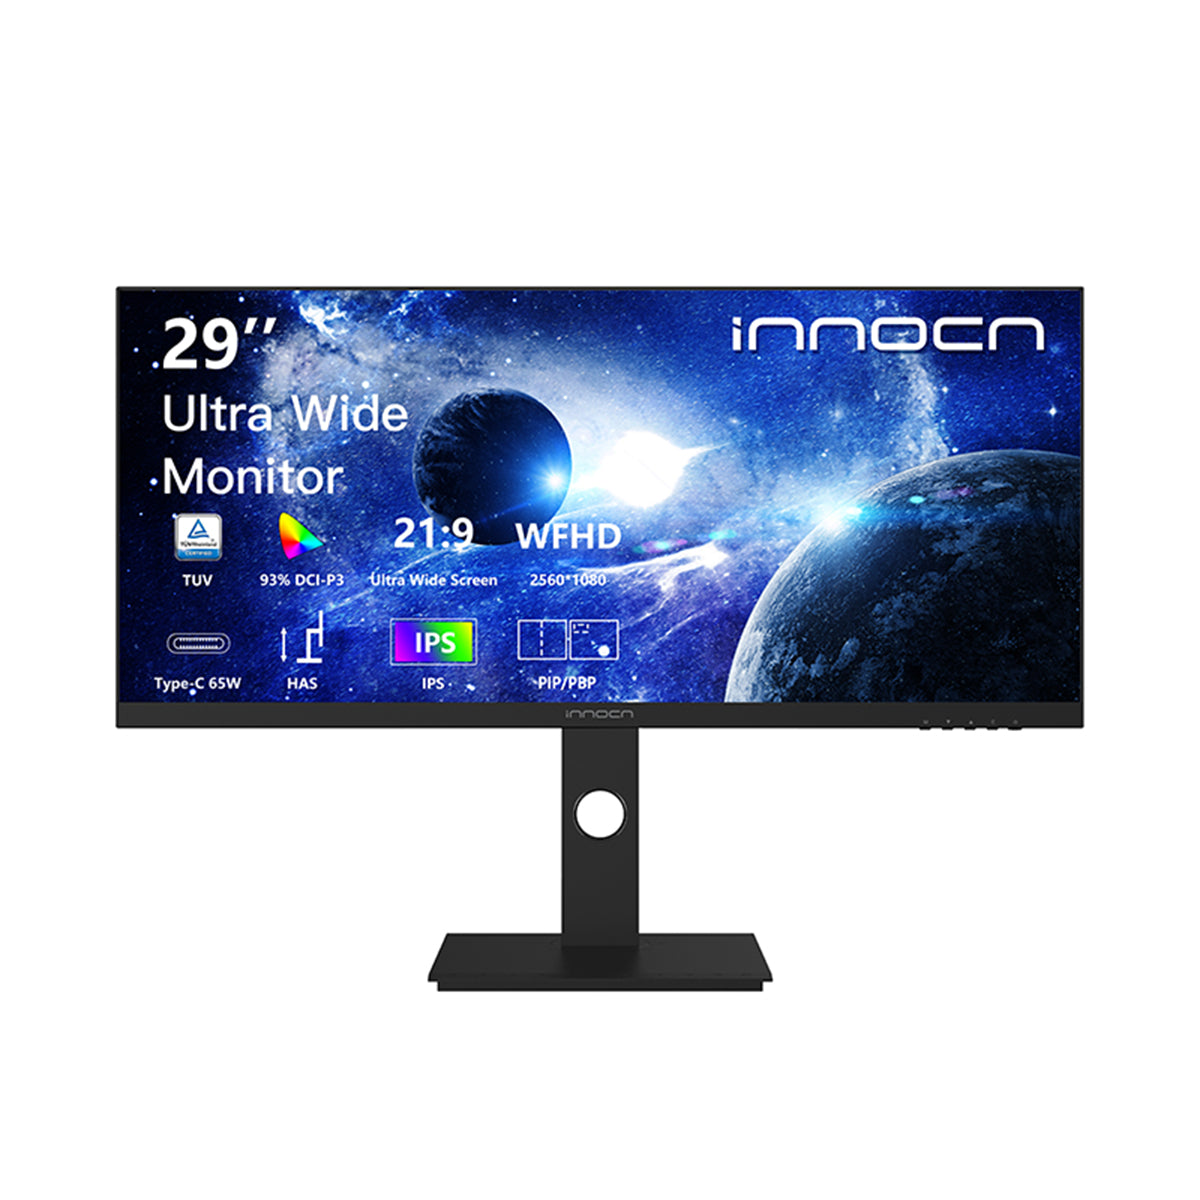 El monitor Innocn 27C1U de 27 pulgadas integra un sensor de